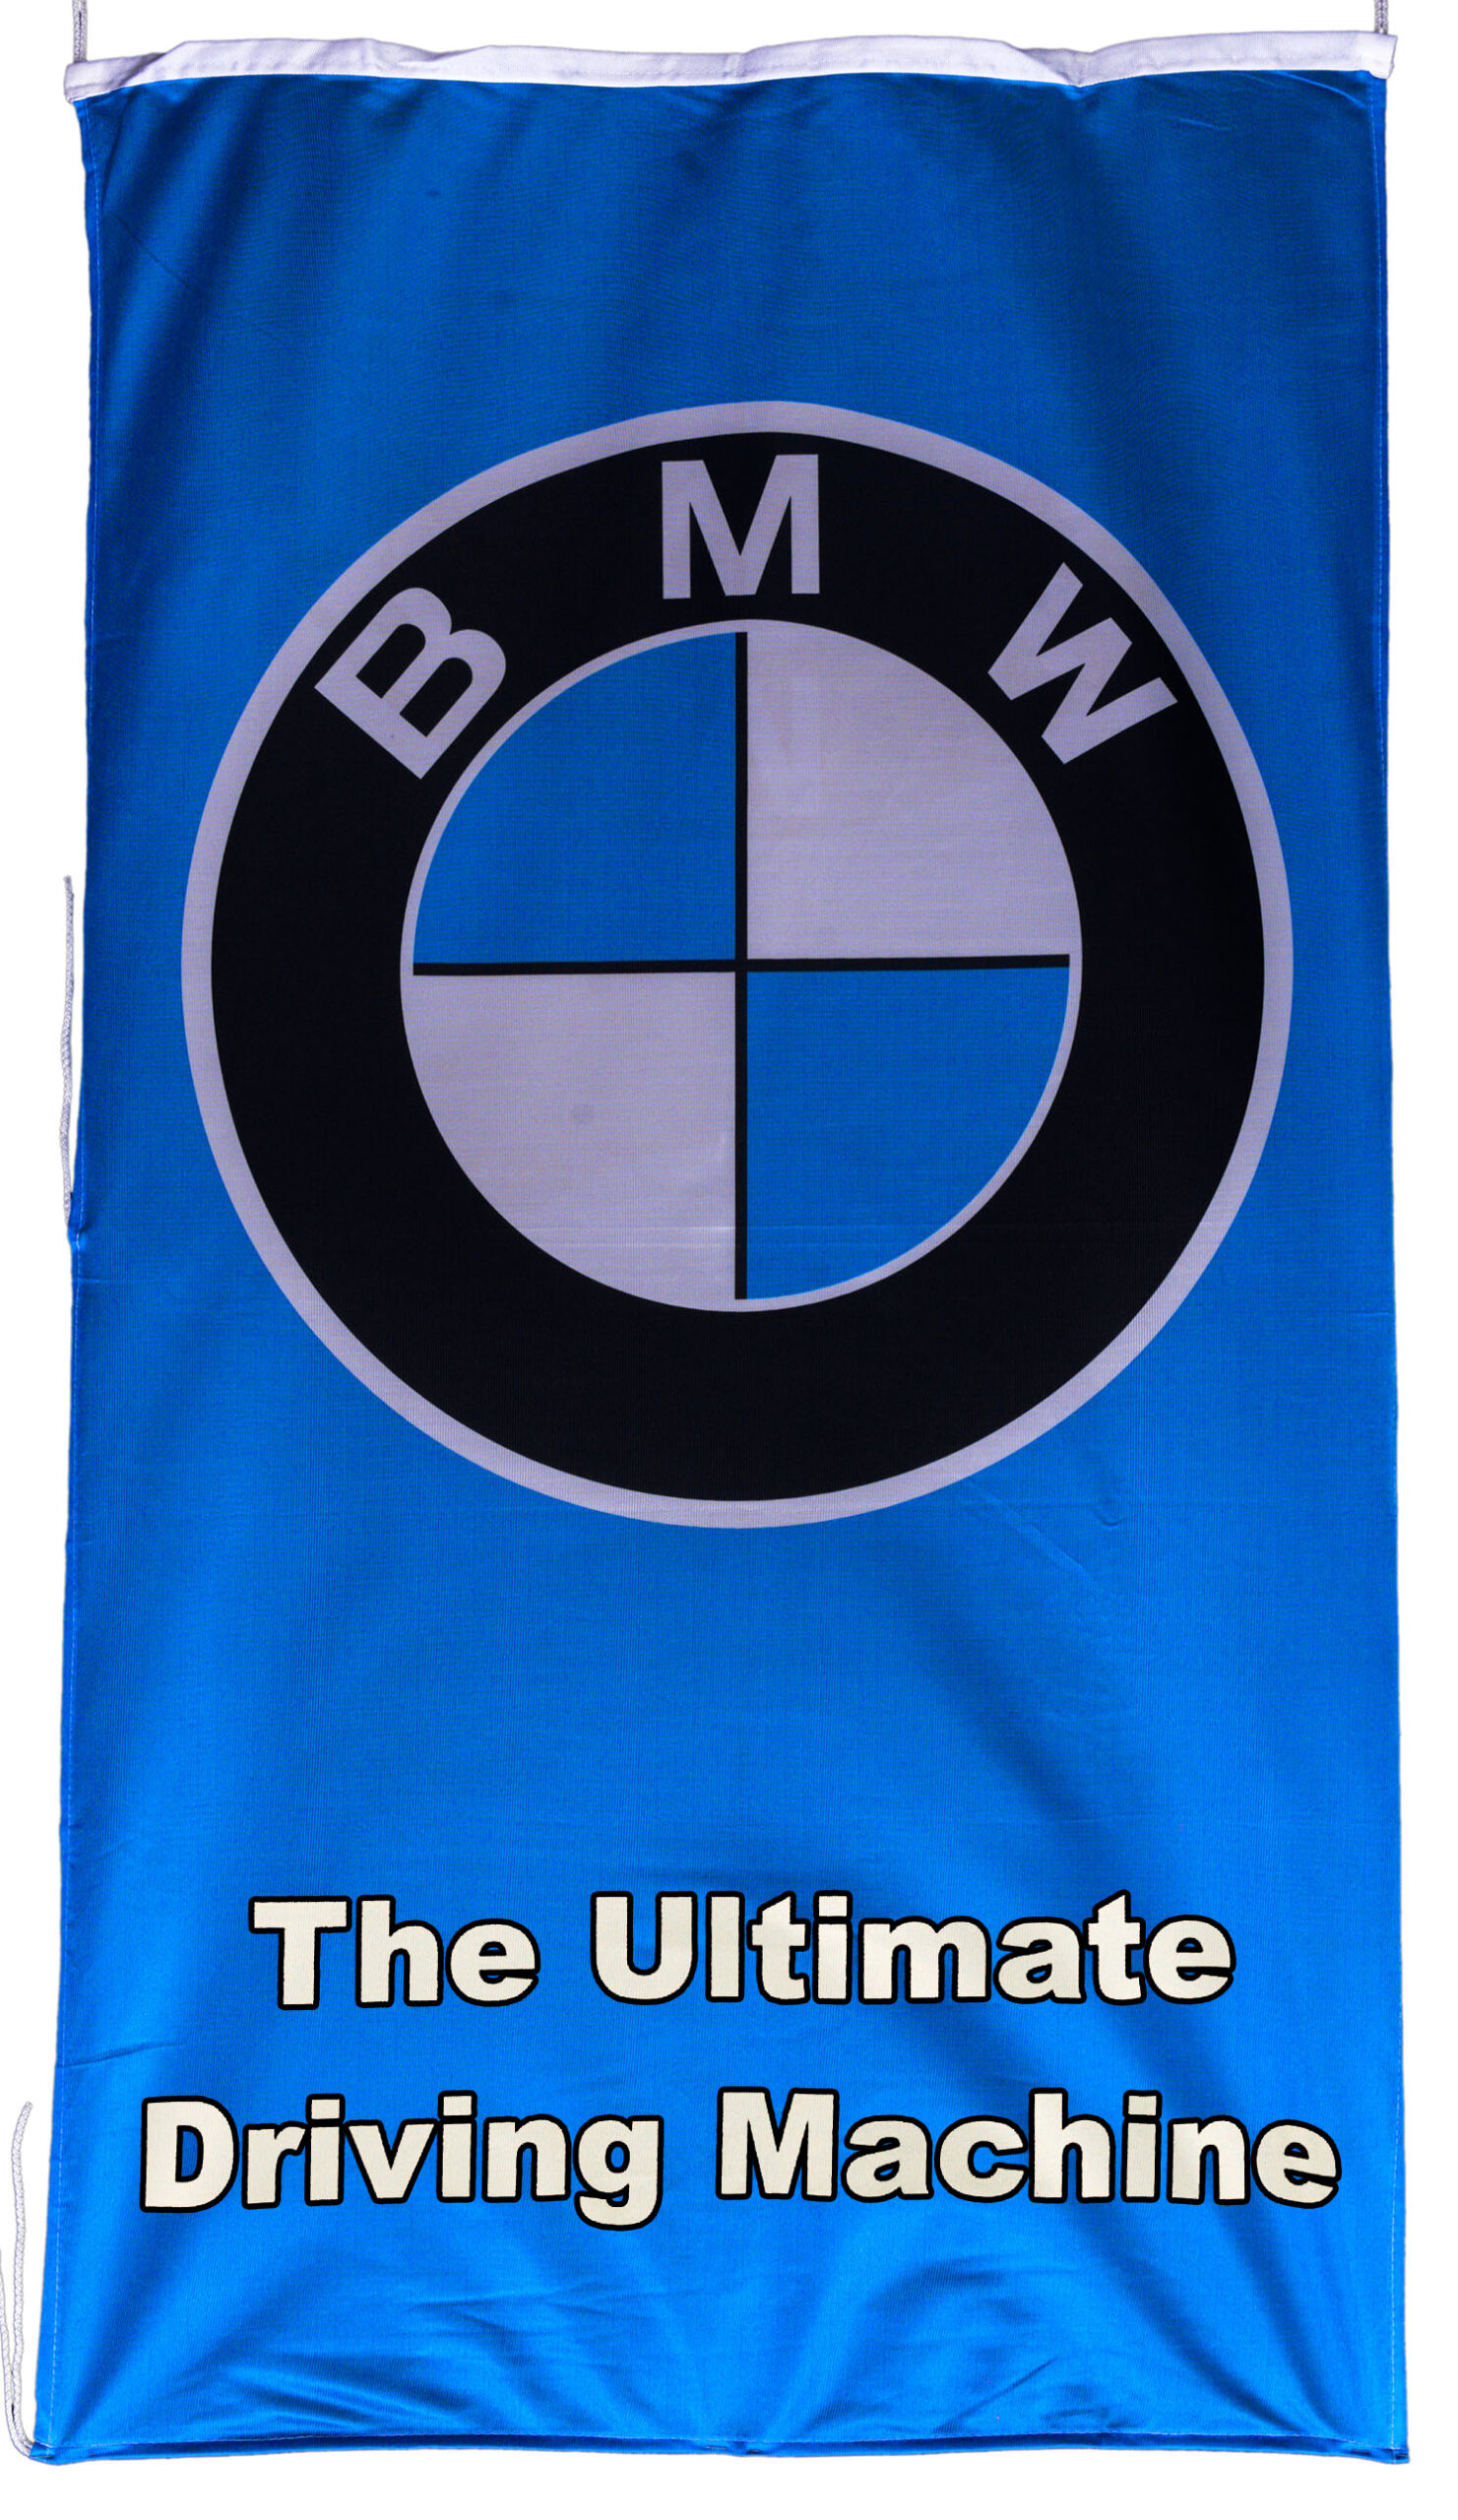 2x8FT BMW-Motorsport-Flag-Banner Black  Advertising Polyester Flag